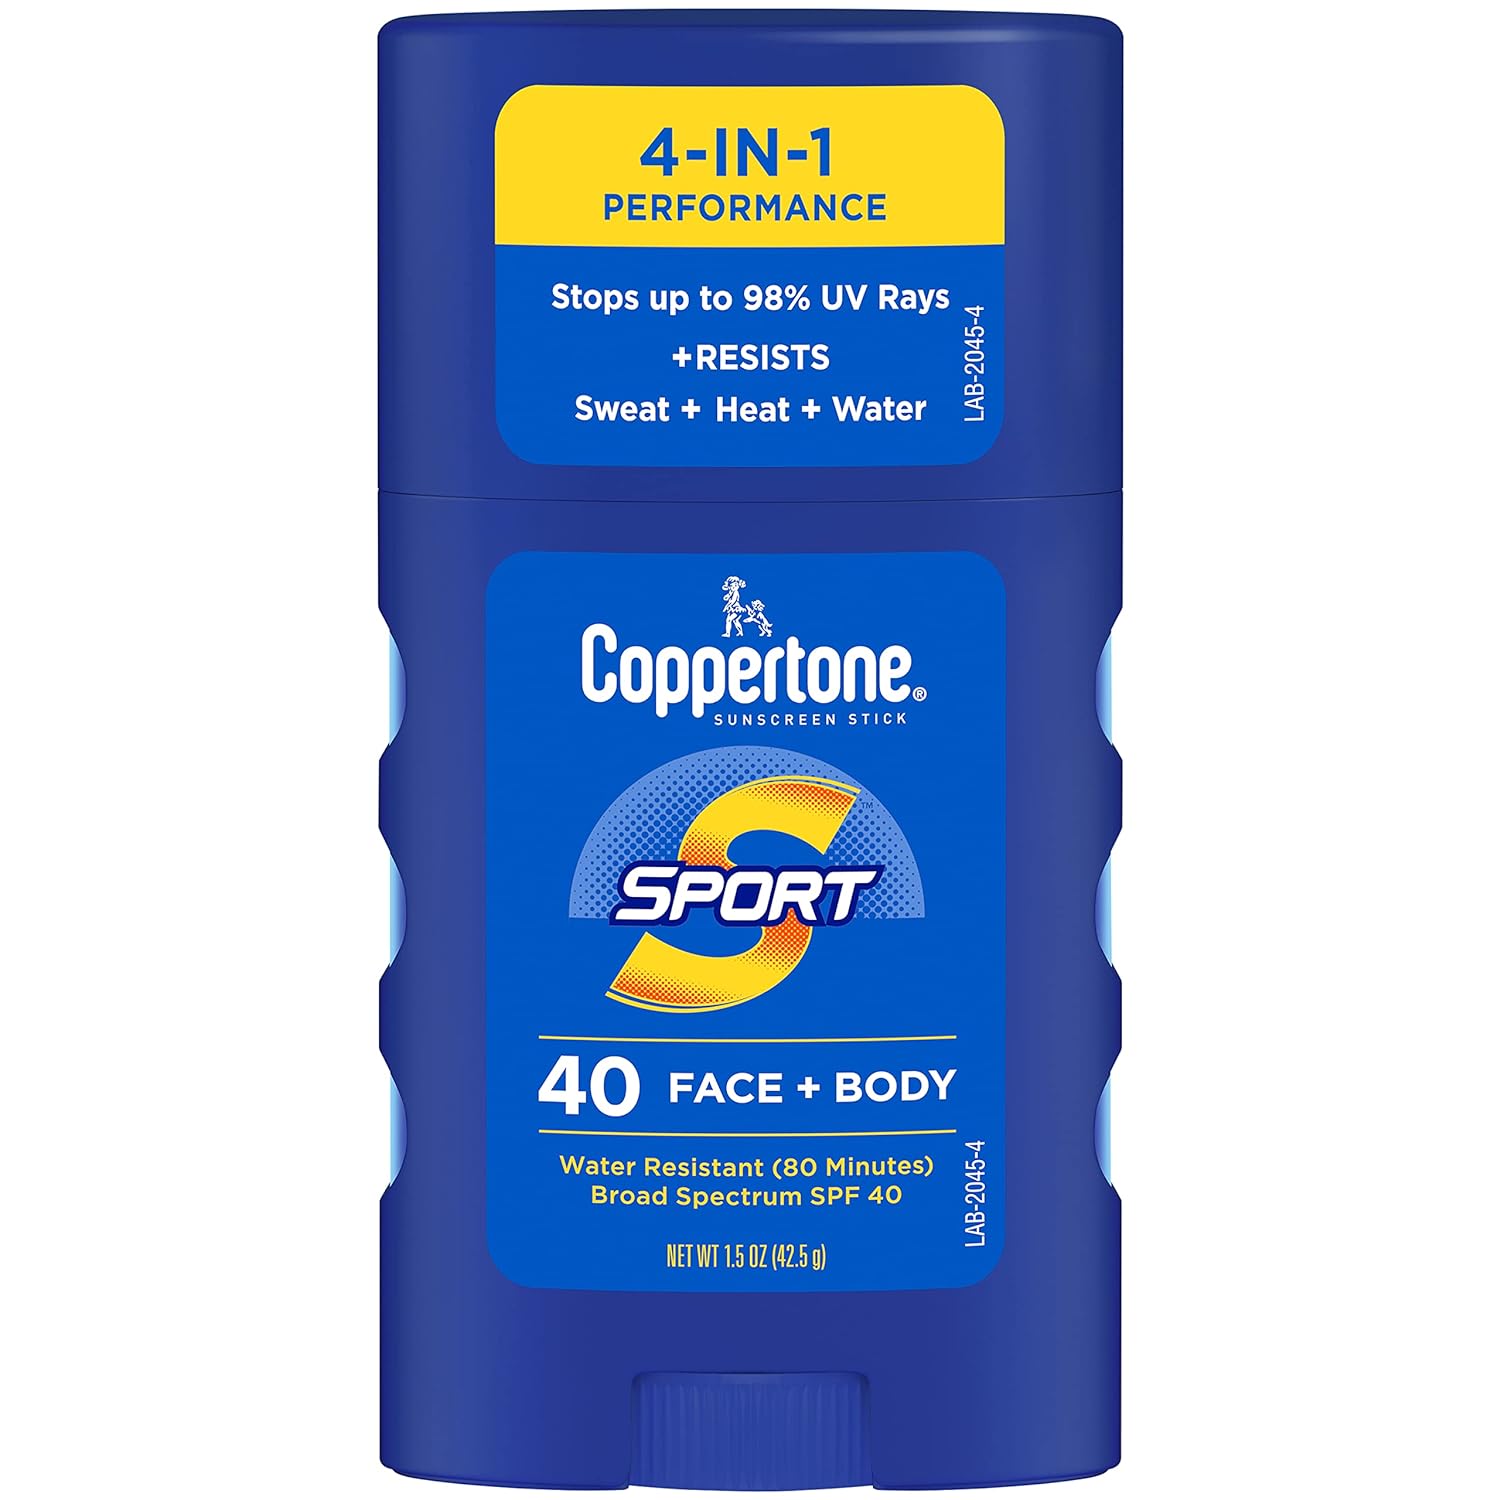 Coppertone SPORT Sunscreen Stick SPF 40, Water Resistant Stick Sunscreen, Travel Size Sunscreen for Face and Body, 1.5 Oz Stick